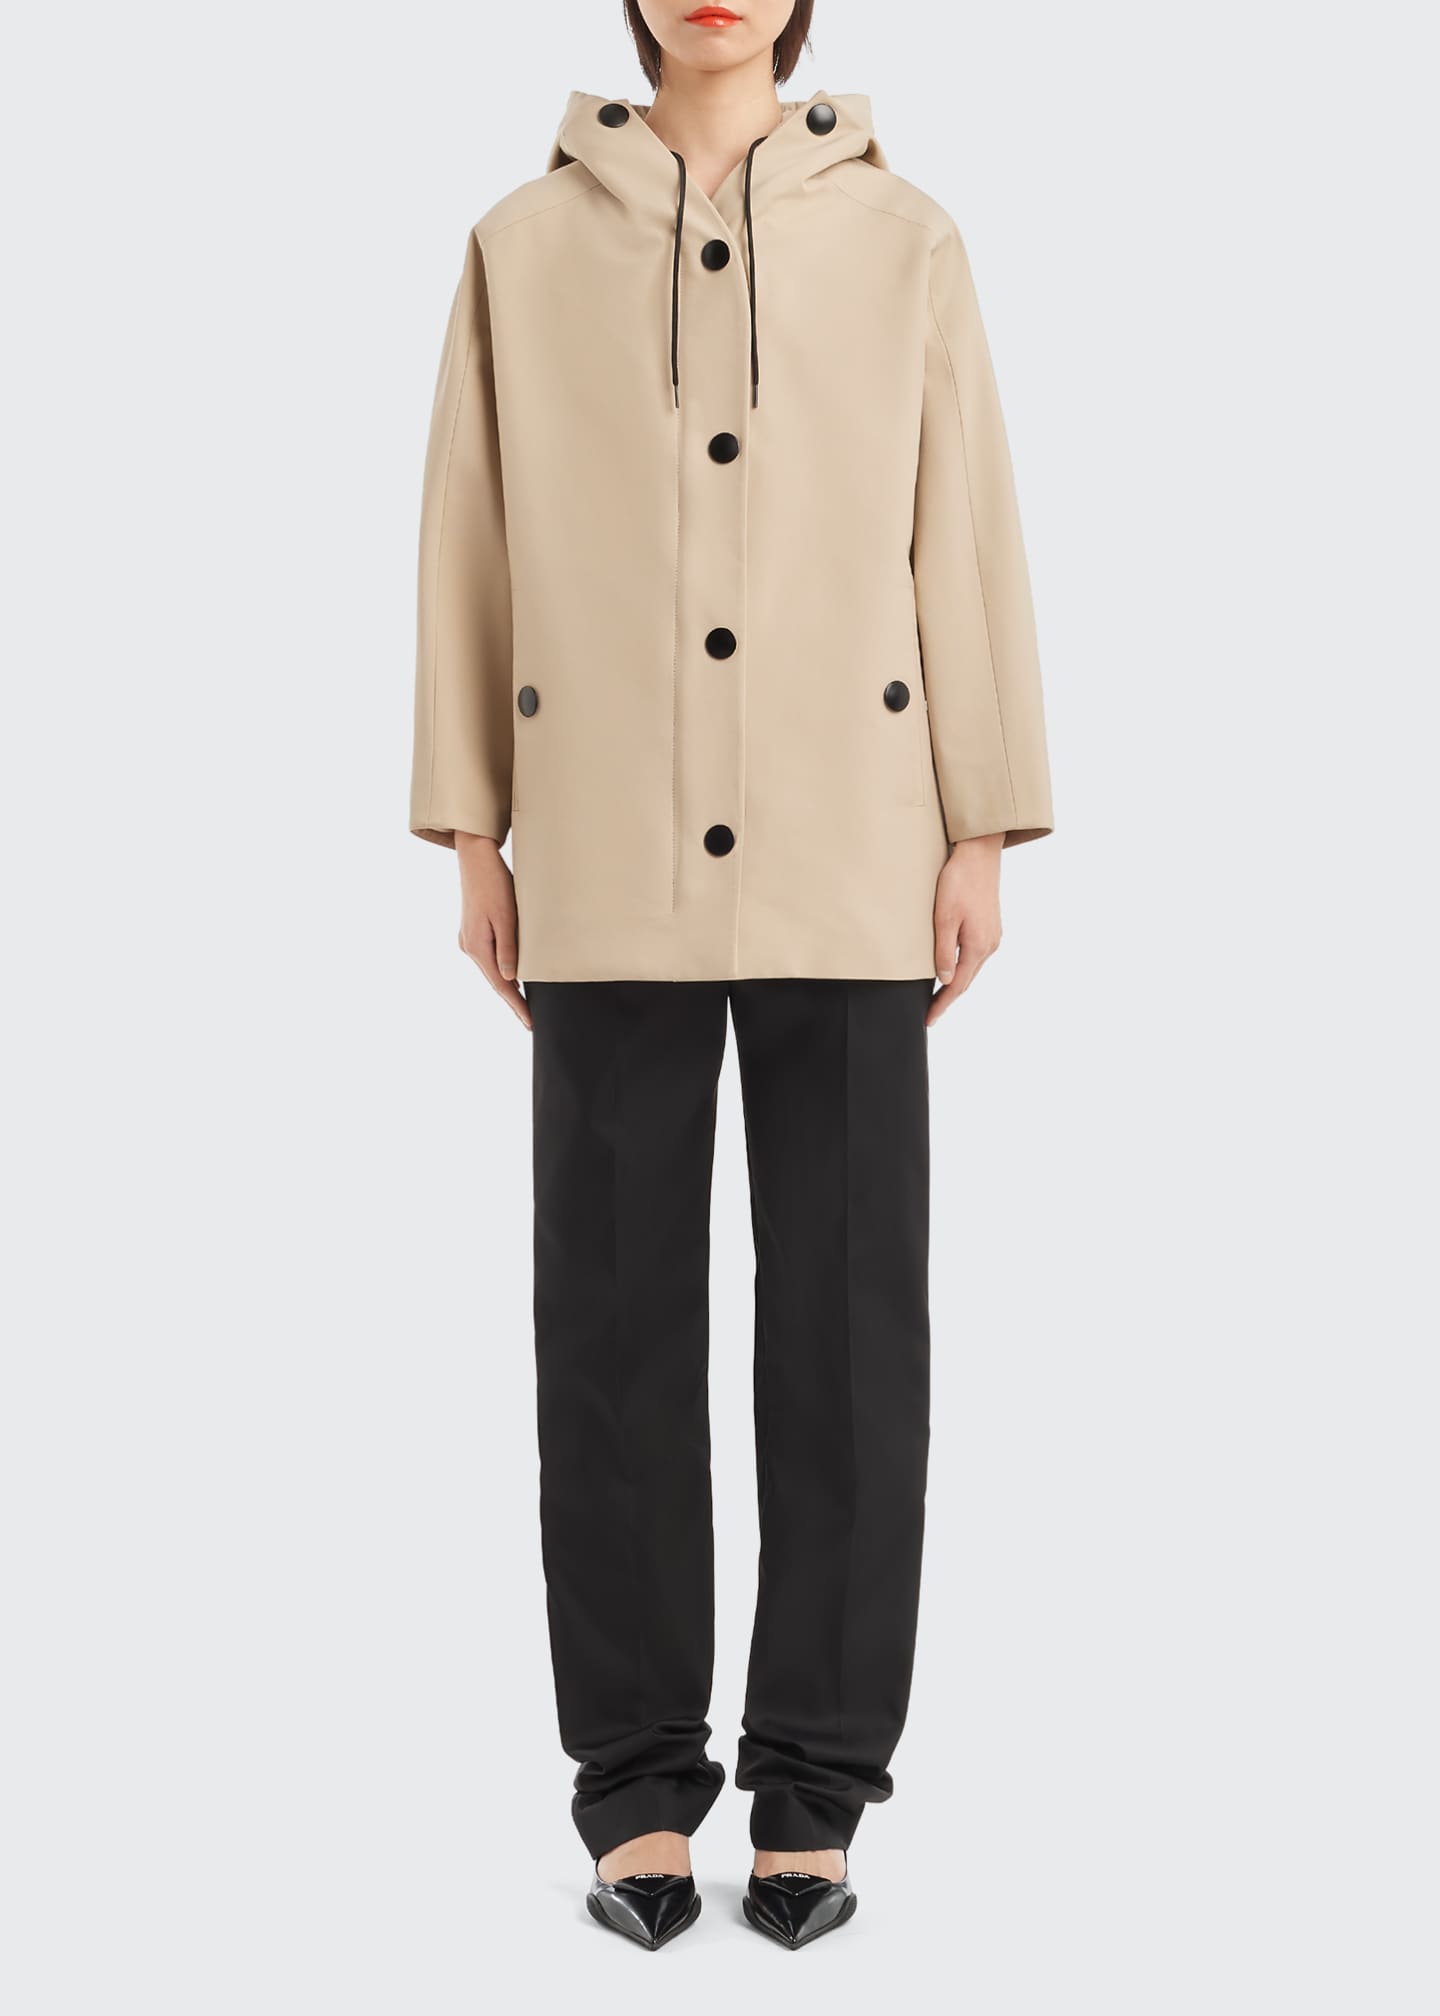 Prada Canvas Rain Jacket w/ Detachable Hood - Bergdorf Goodman